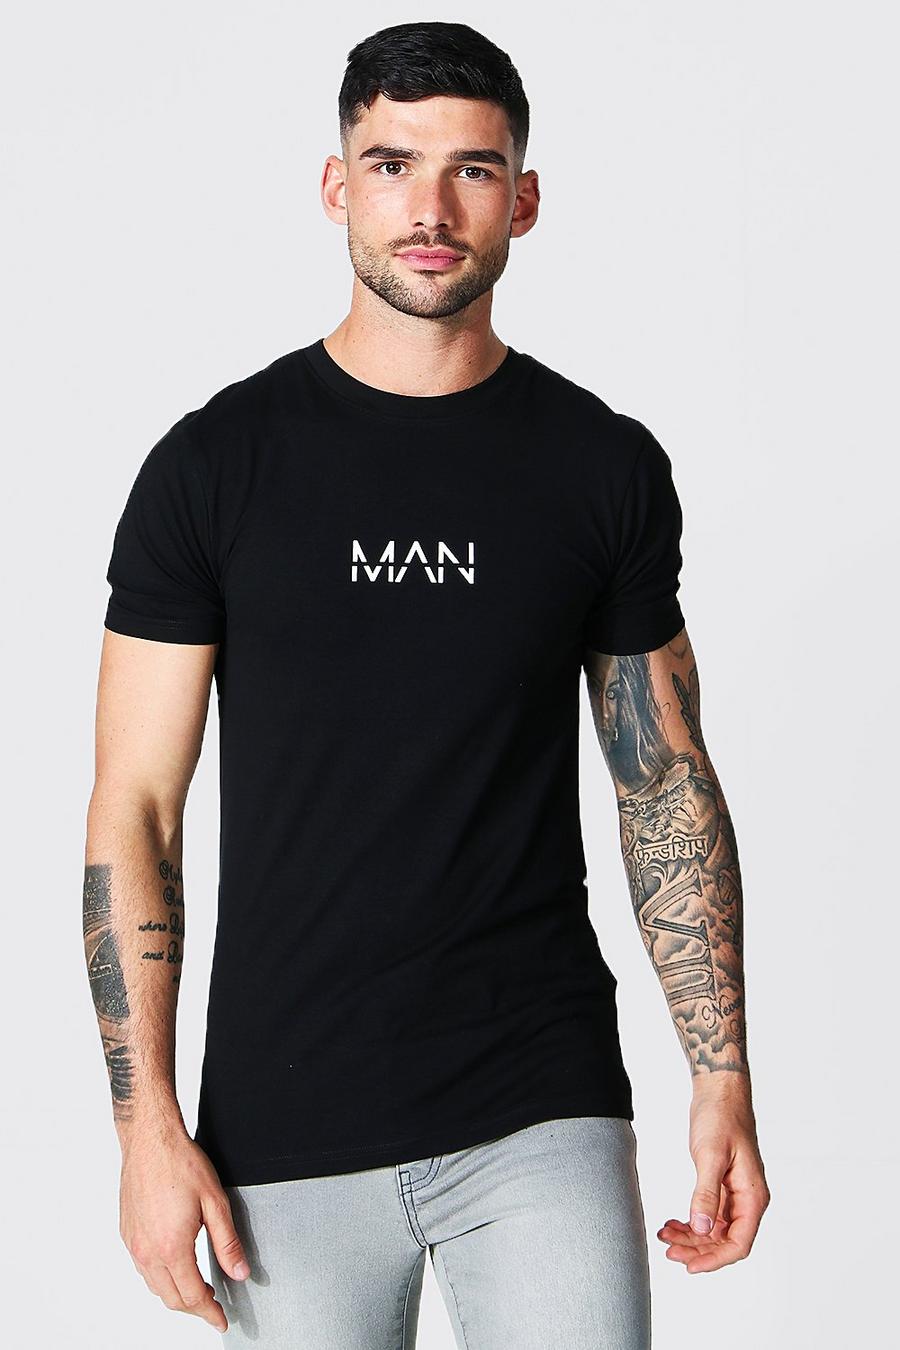 Camiseta MAN Original ajustada al músculo, Black image number 1